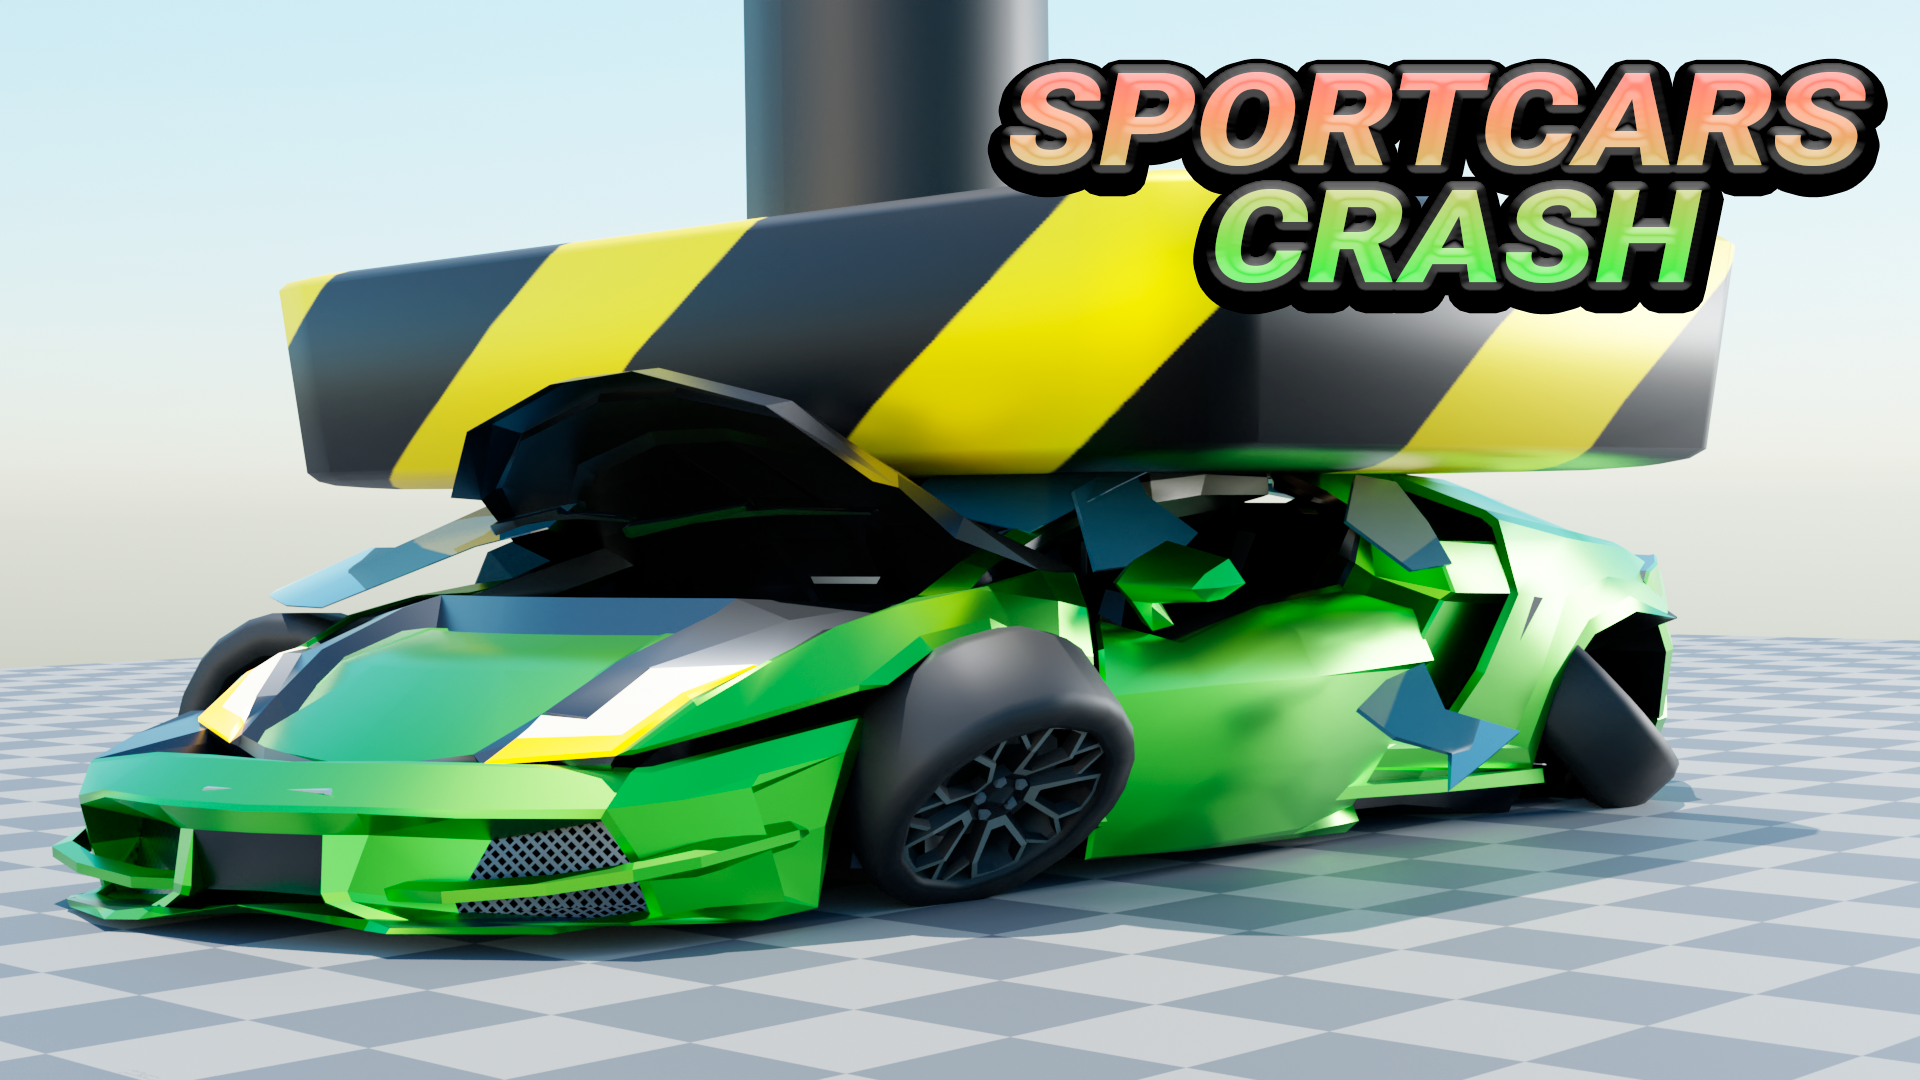 Sportcars Crash Game Image